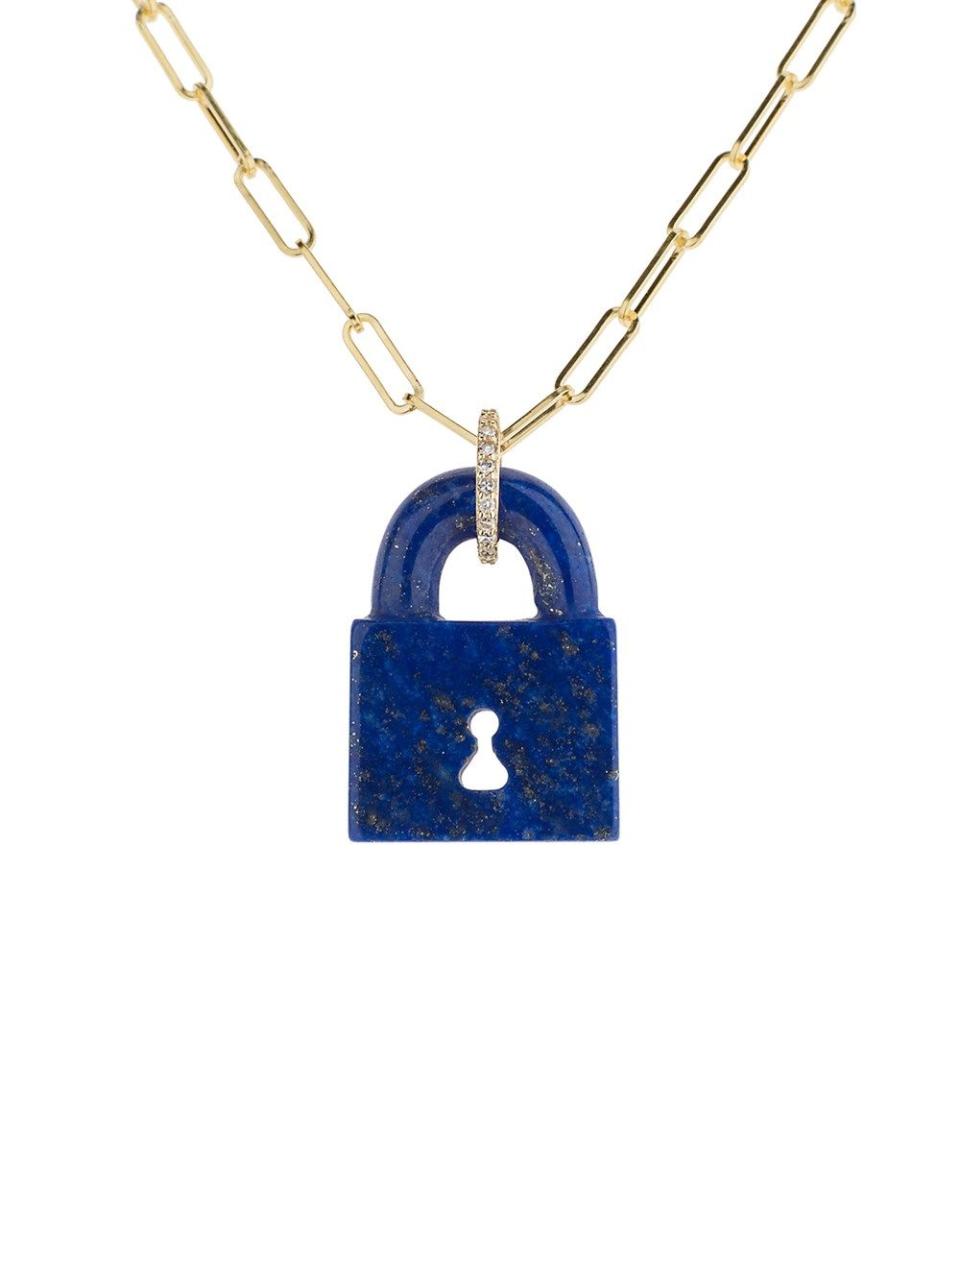 6) Lapis Pad Lock Chain Necklace